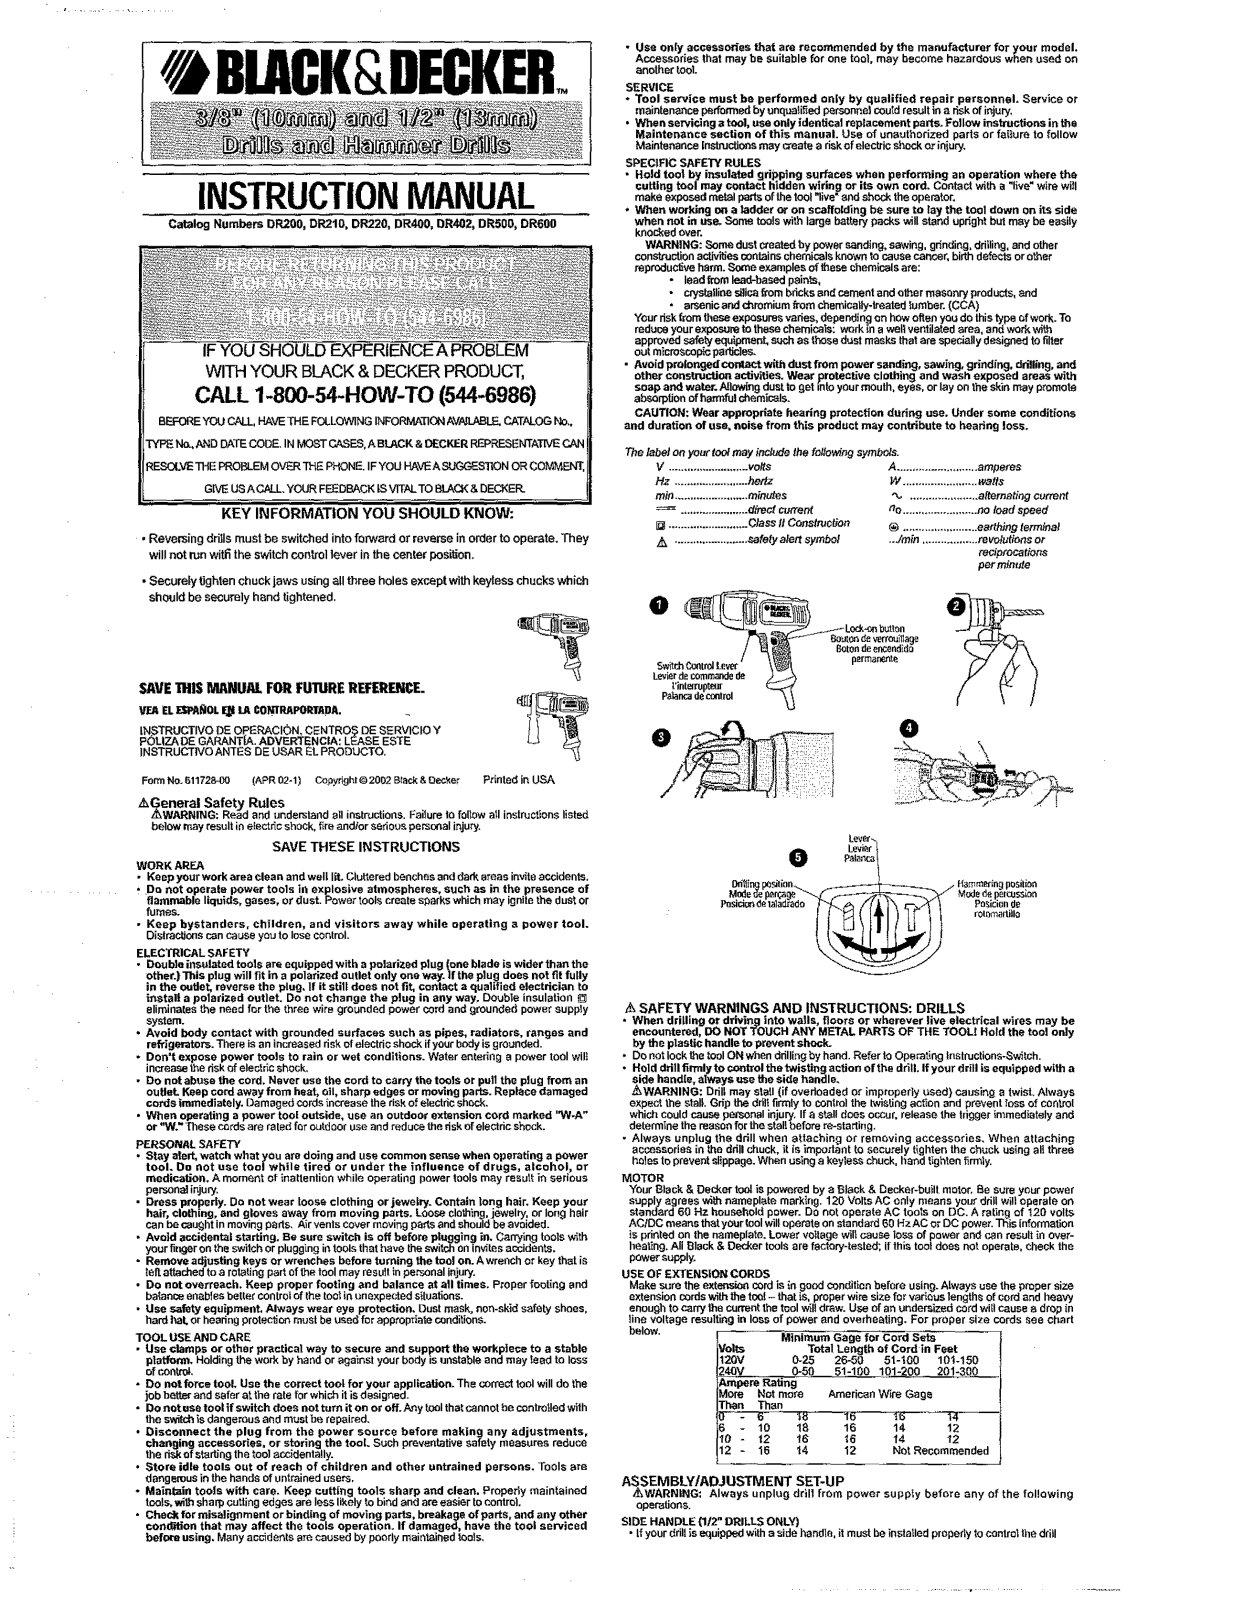 Black & Decker DR600 TYPE 3 Owner’s Manual